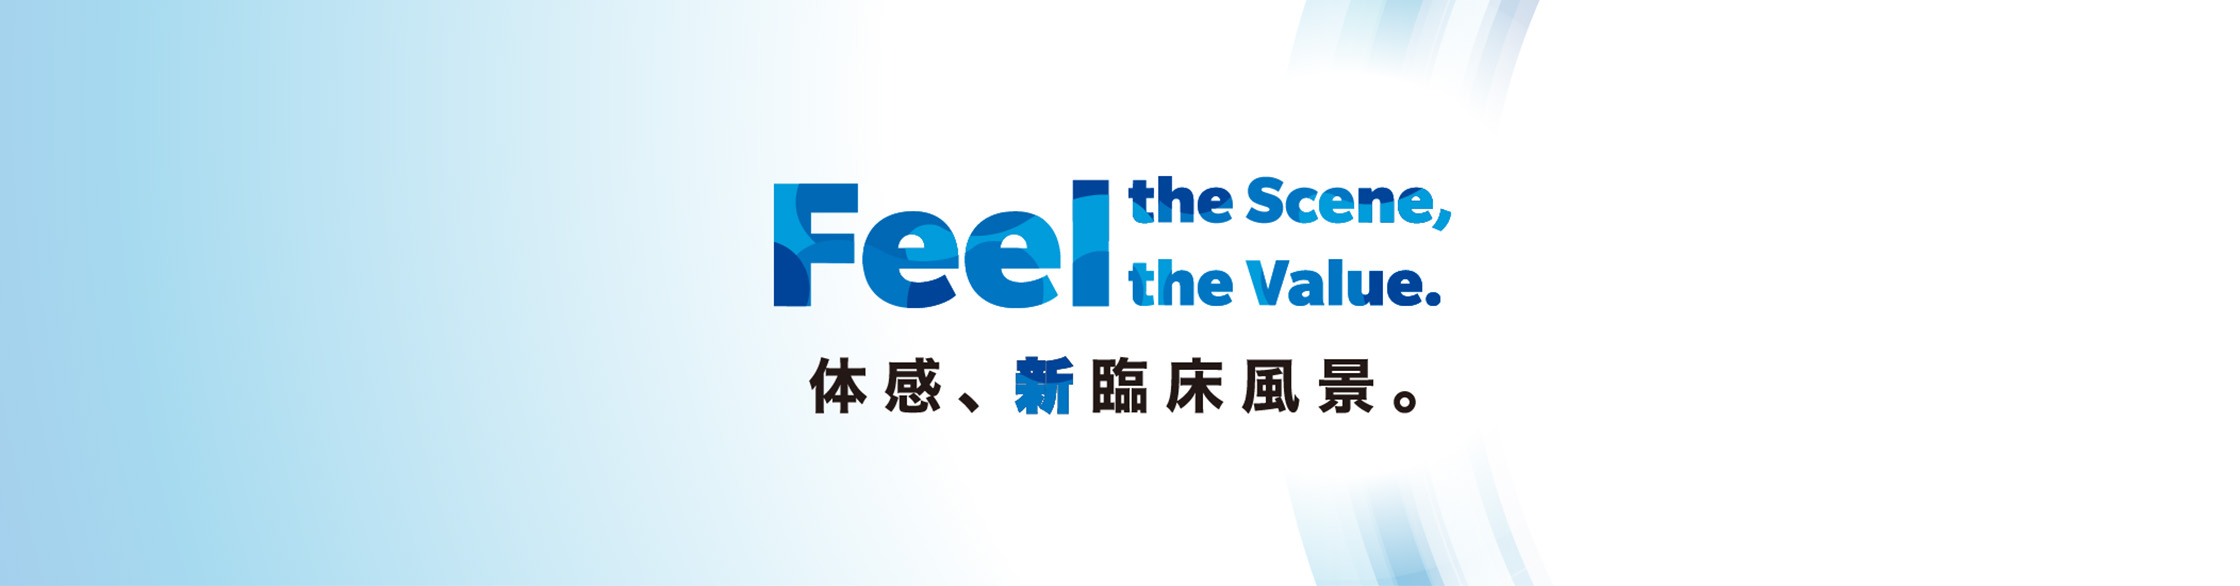 Feel the Scene, Feel the Value. 体感、新臨床風景。